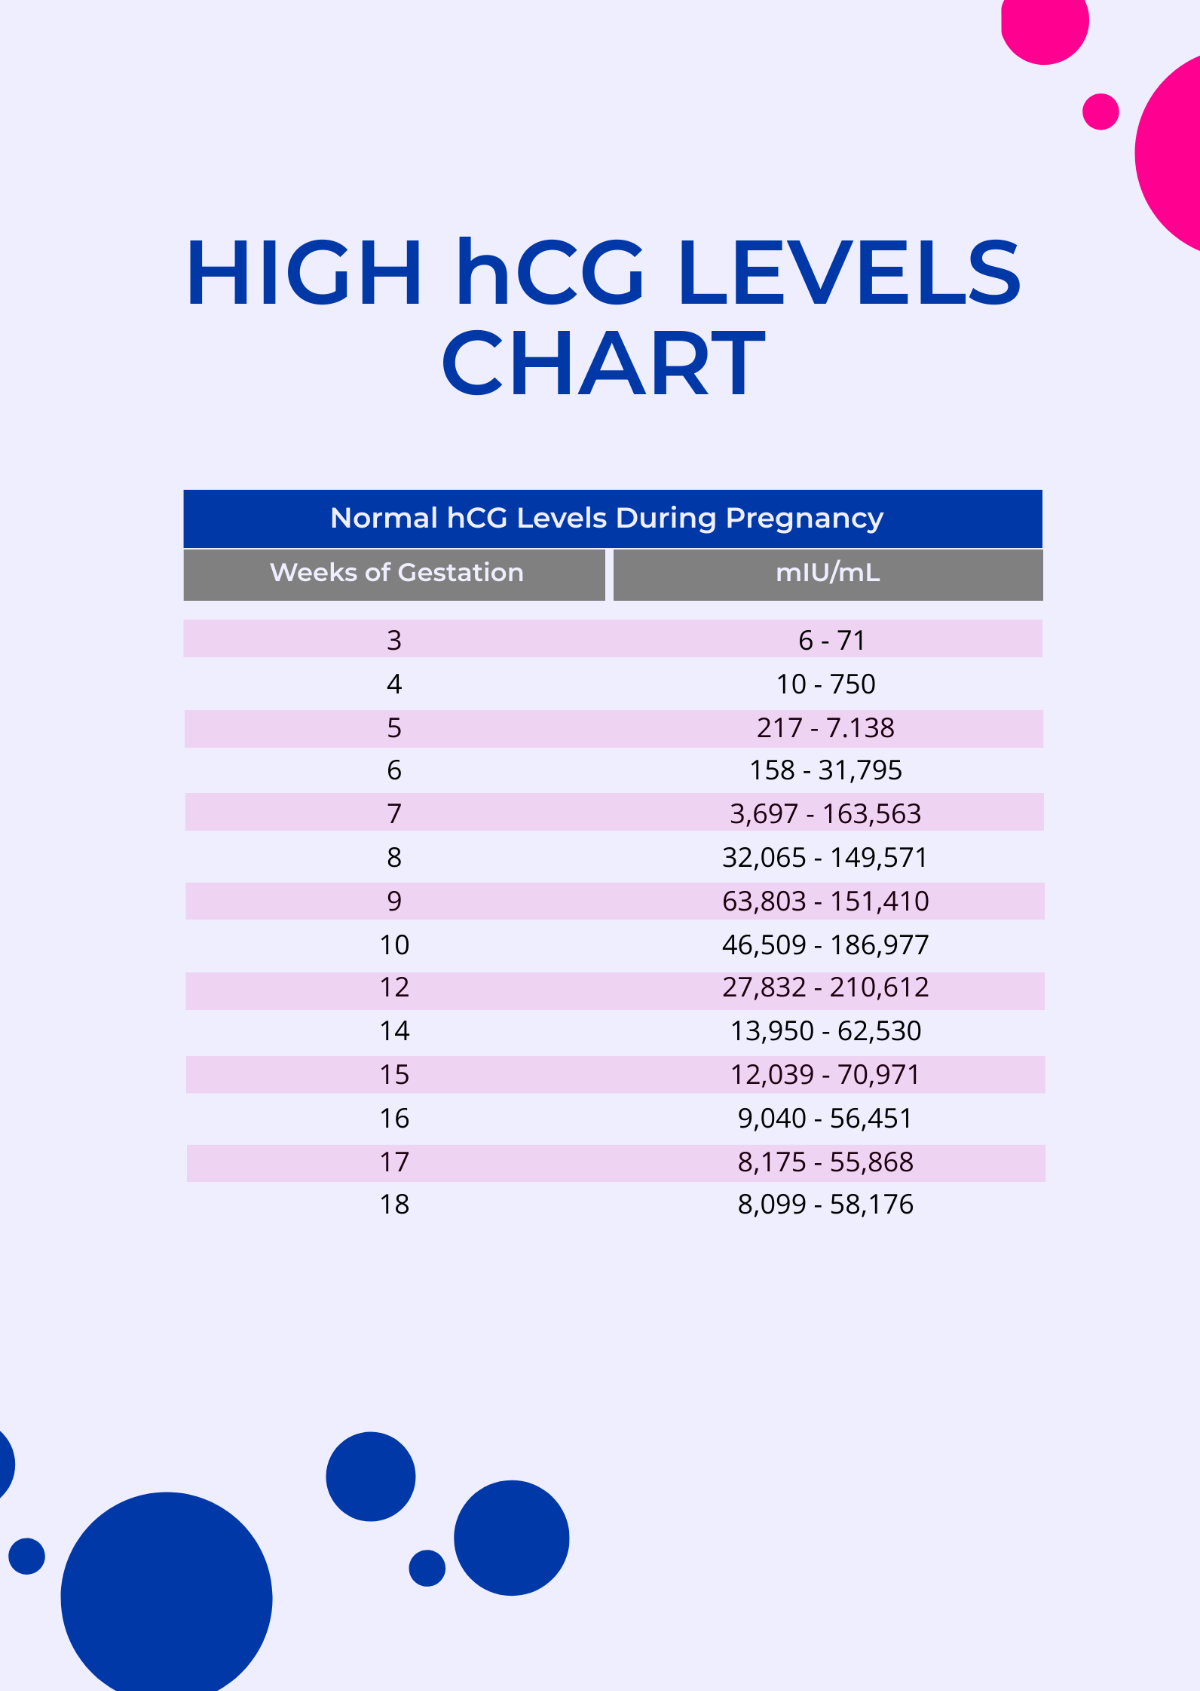 High HCG Levels Chart Template